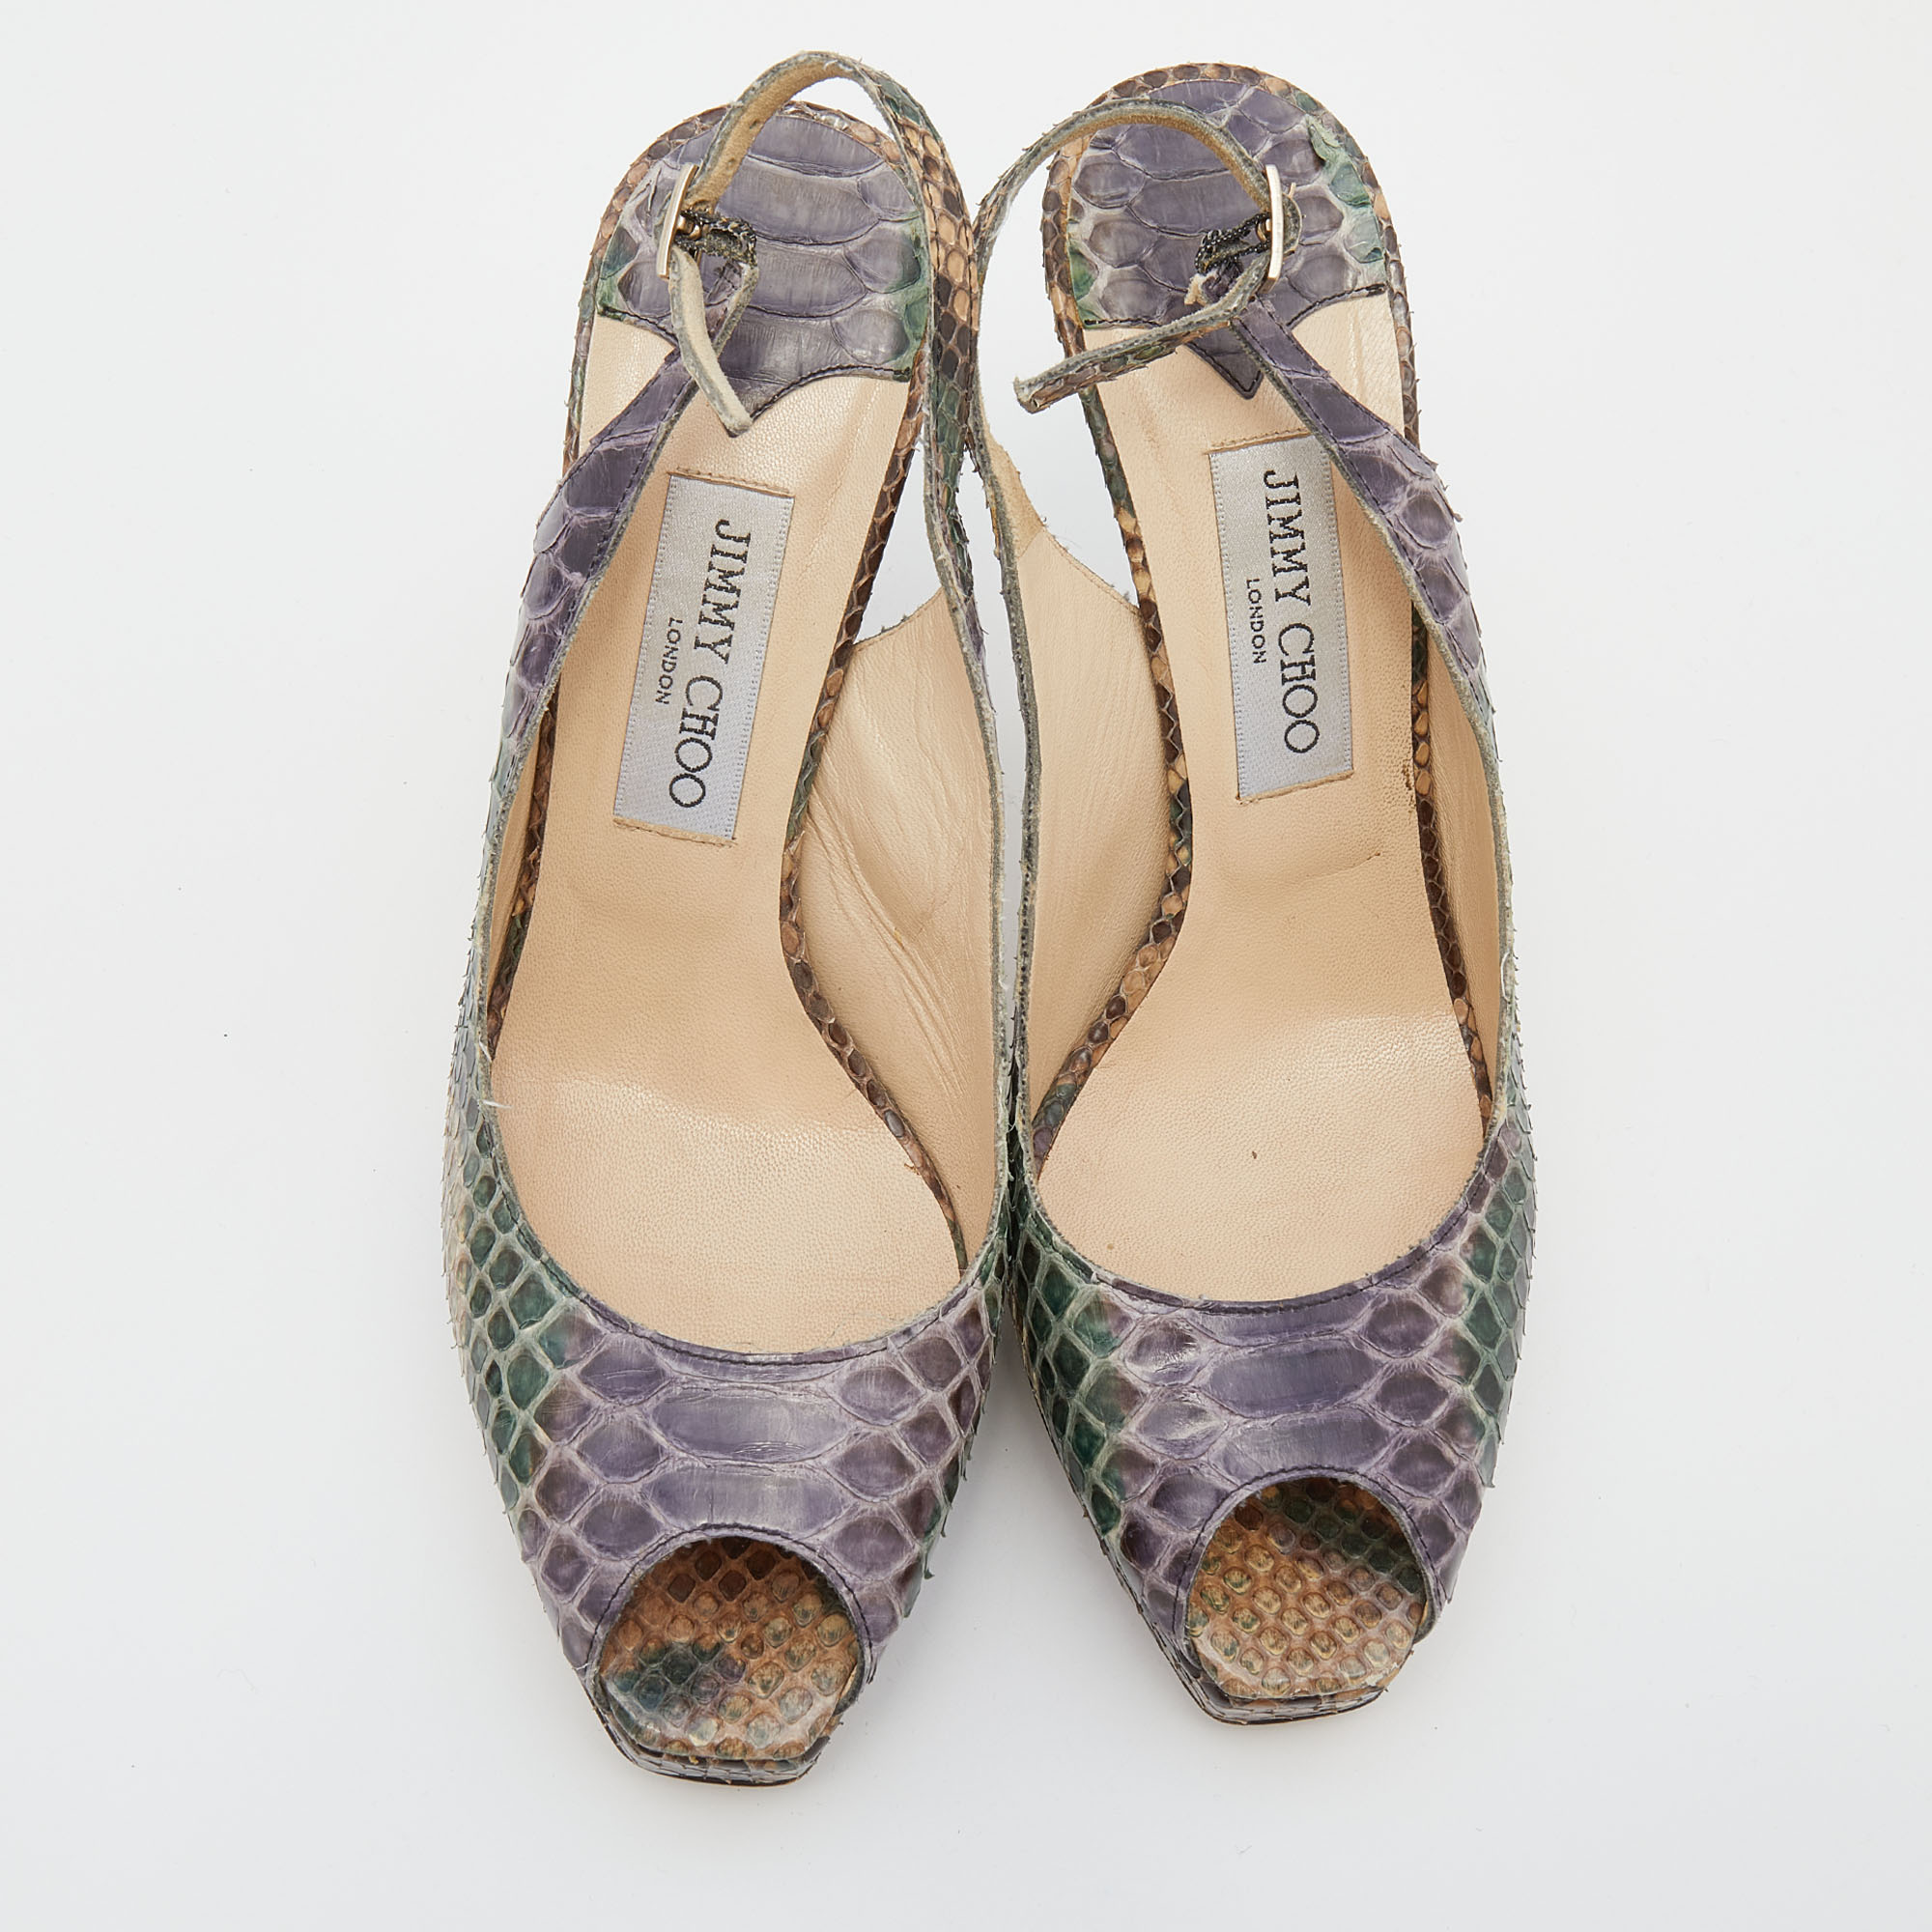 Jimmy Choo Multicolor Python Leather Peep Toe Platform Nova Slingback Sandals Size 39.5